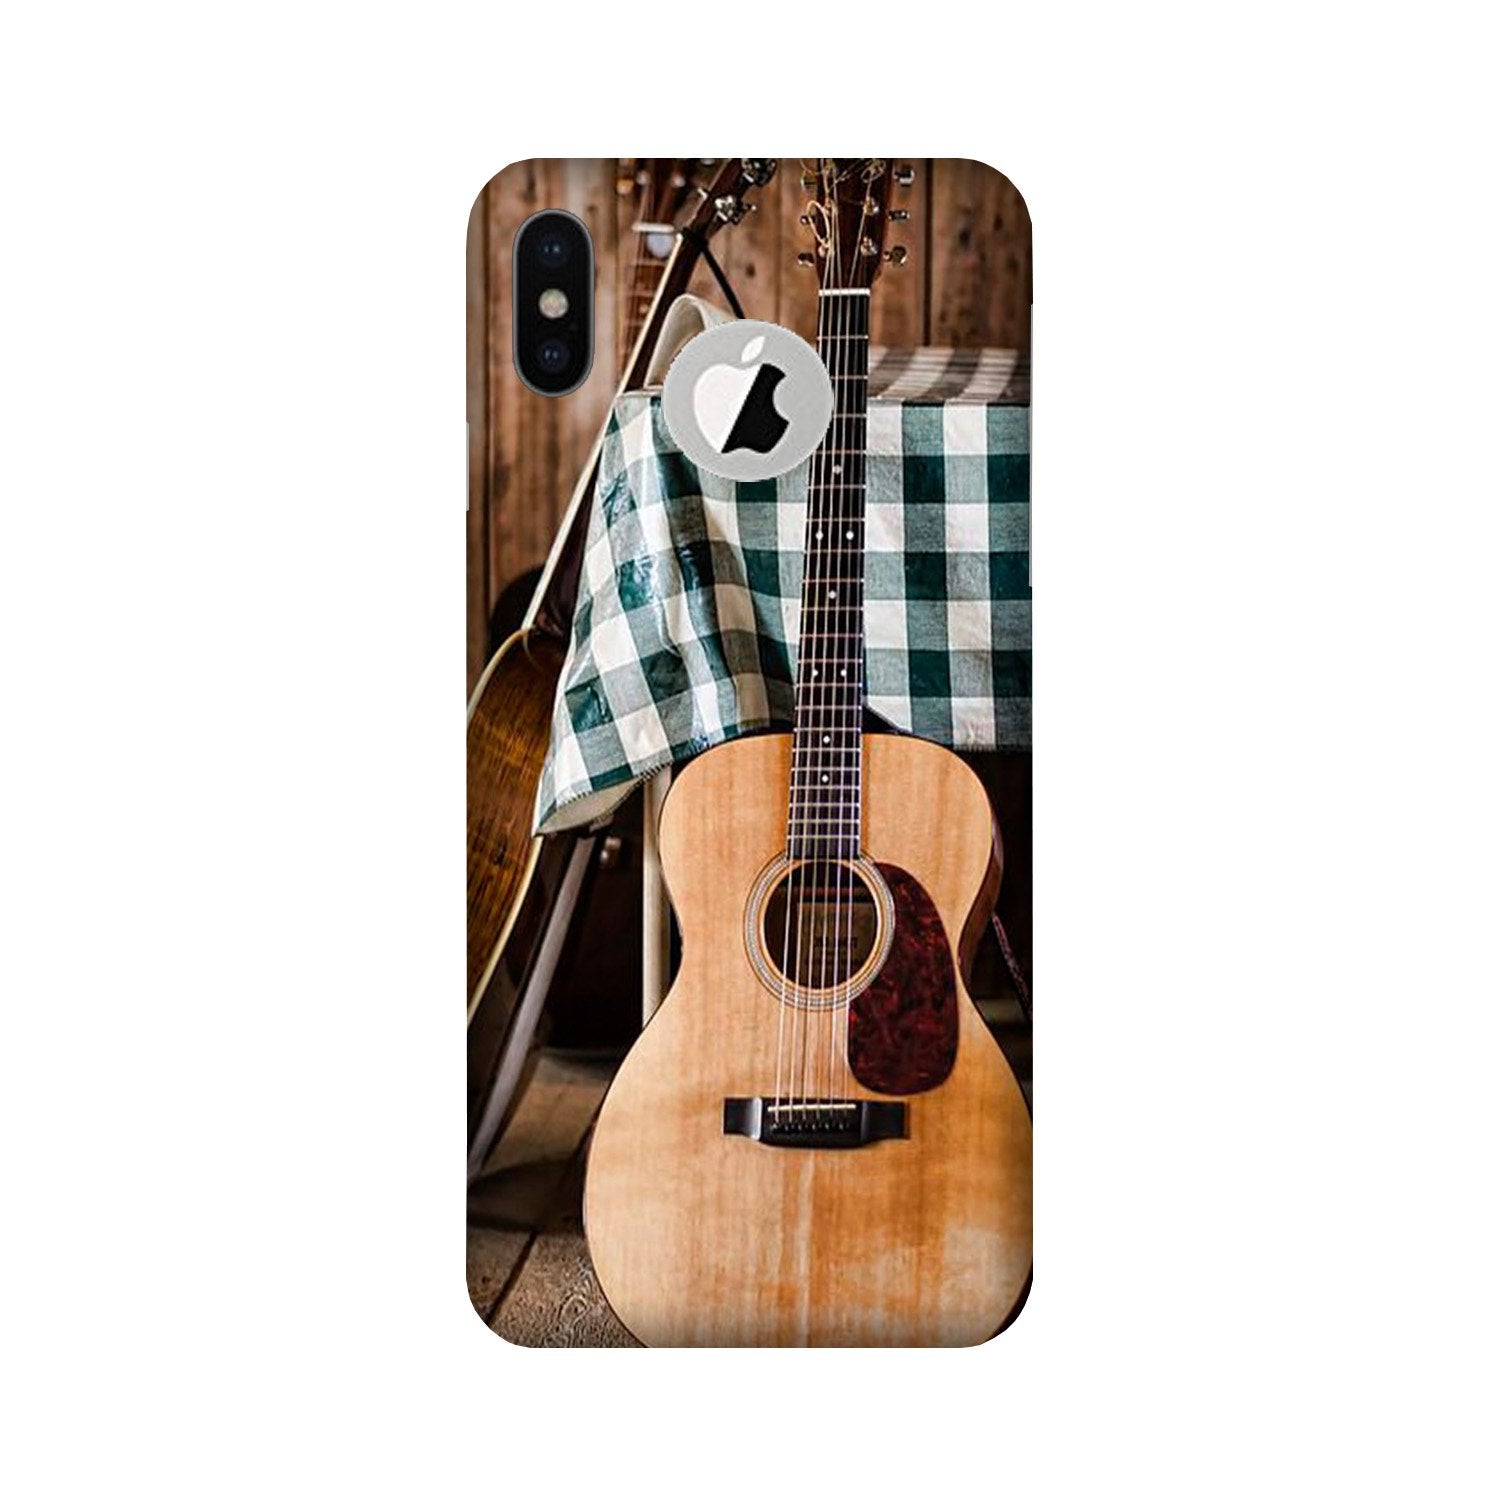 Guitar2 Case for iPhone X logo cut